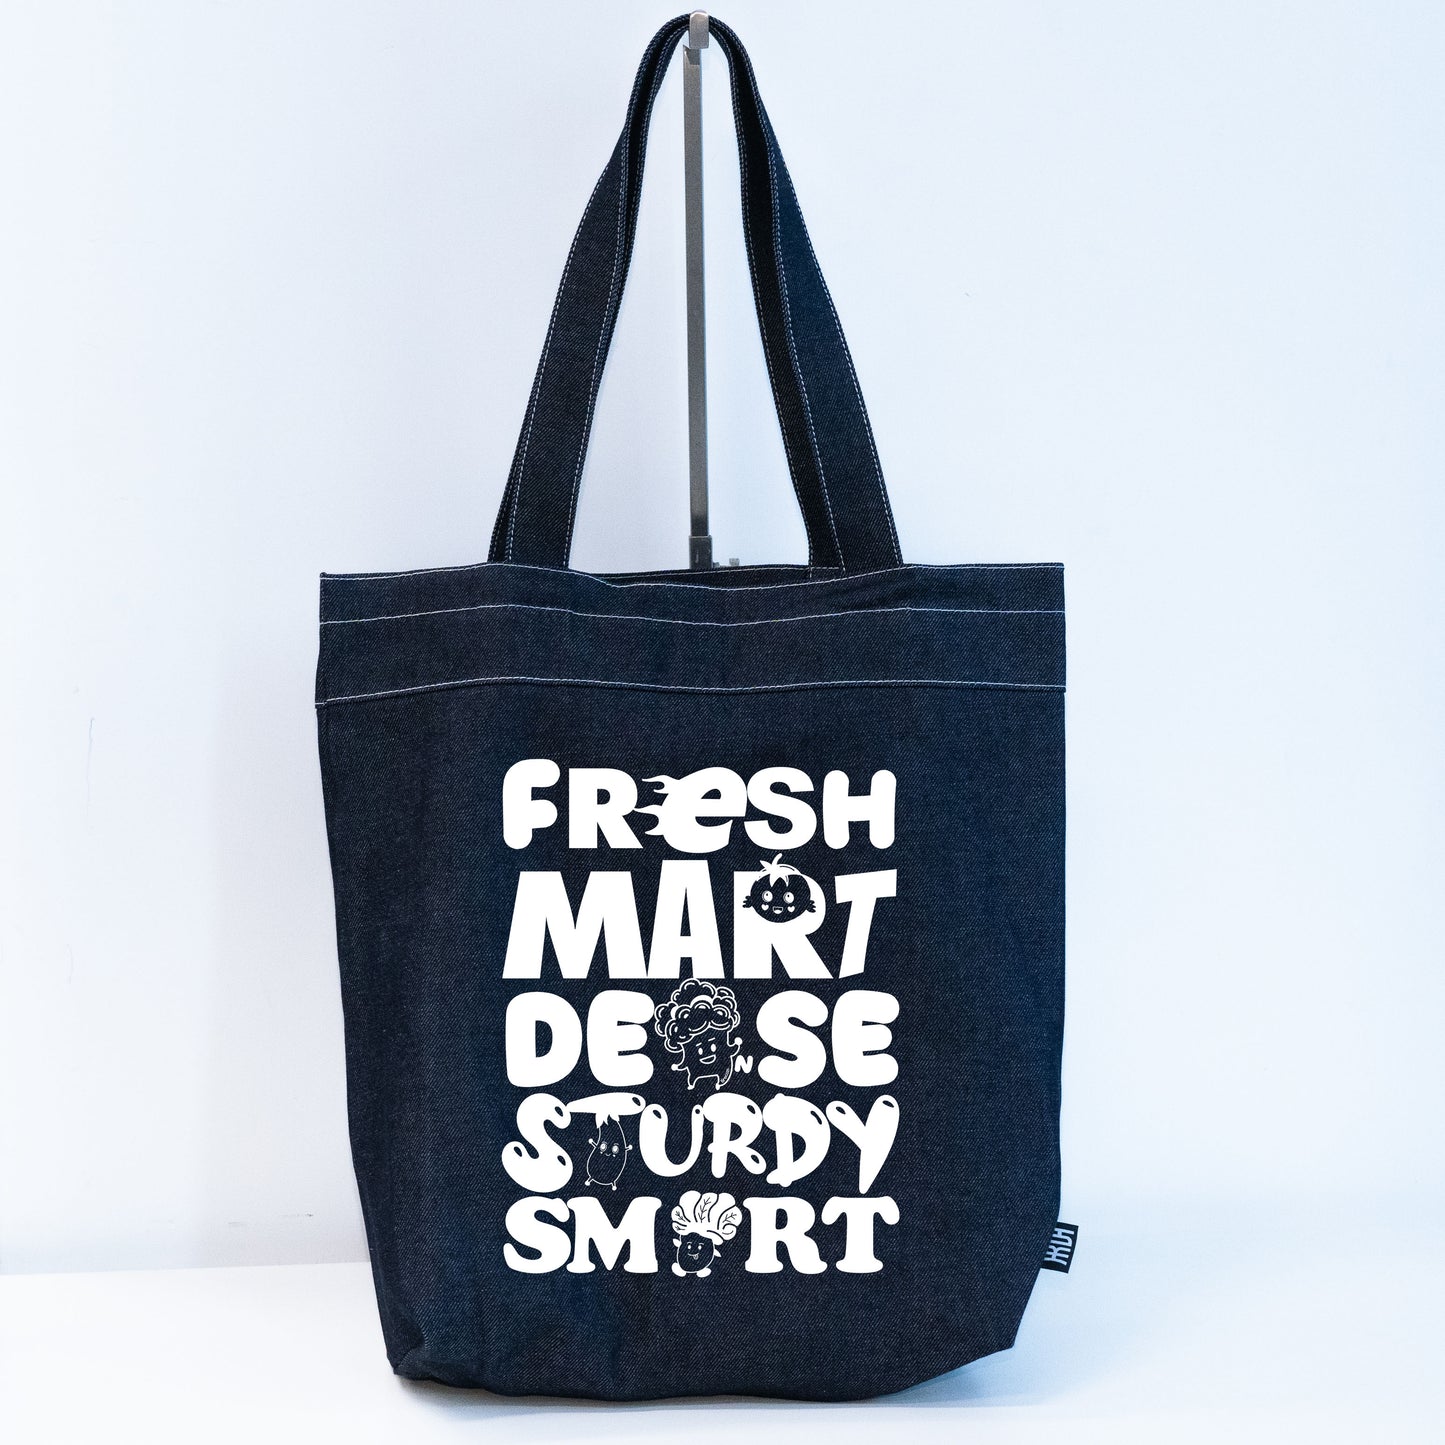 "Fresh Mart" Tote Bag Designed by Sze Wing Yin Janice